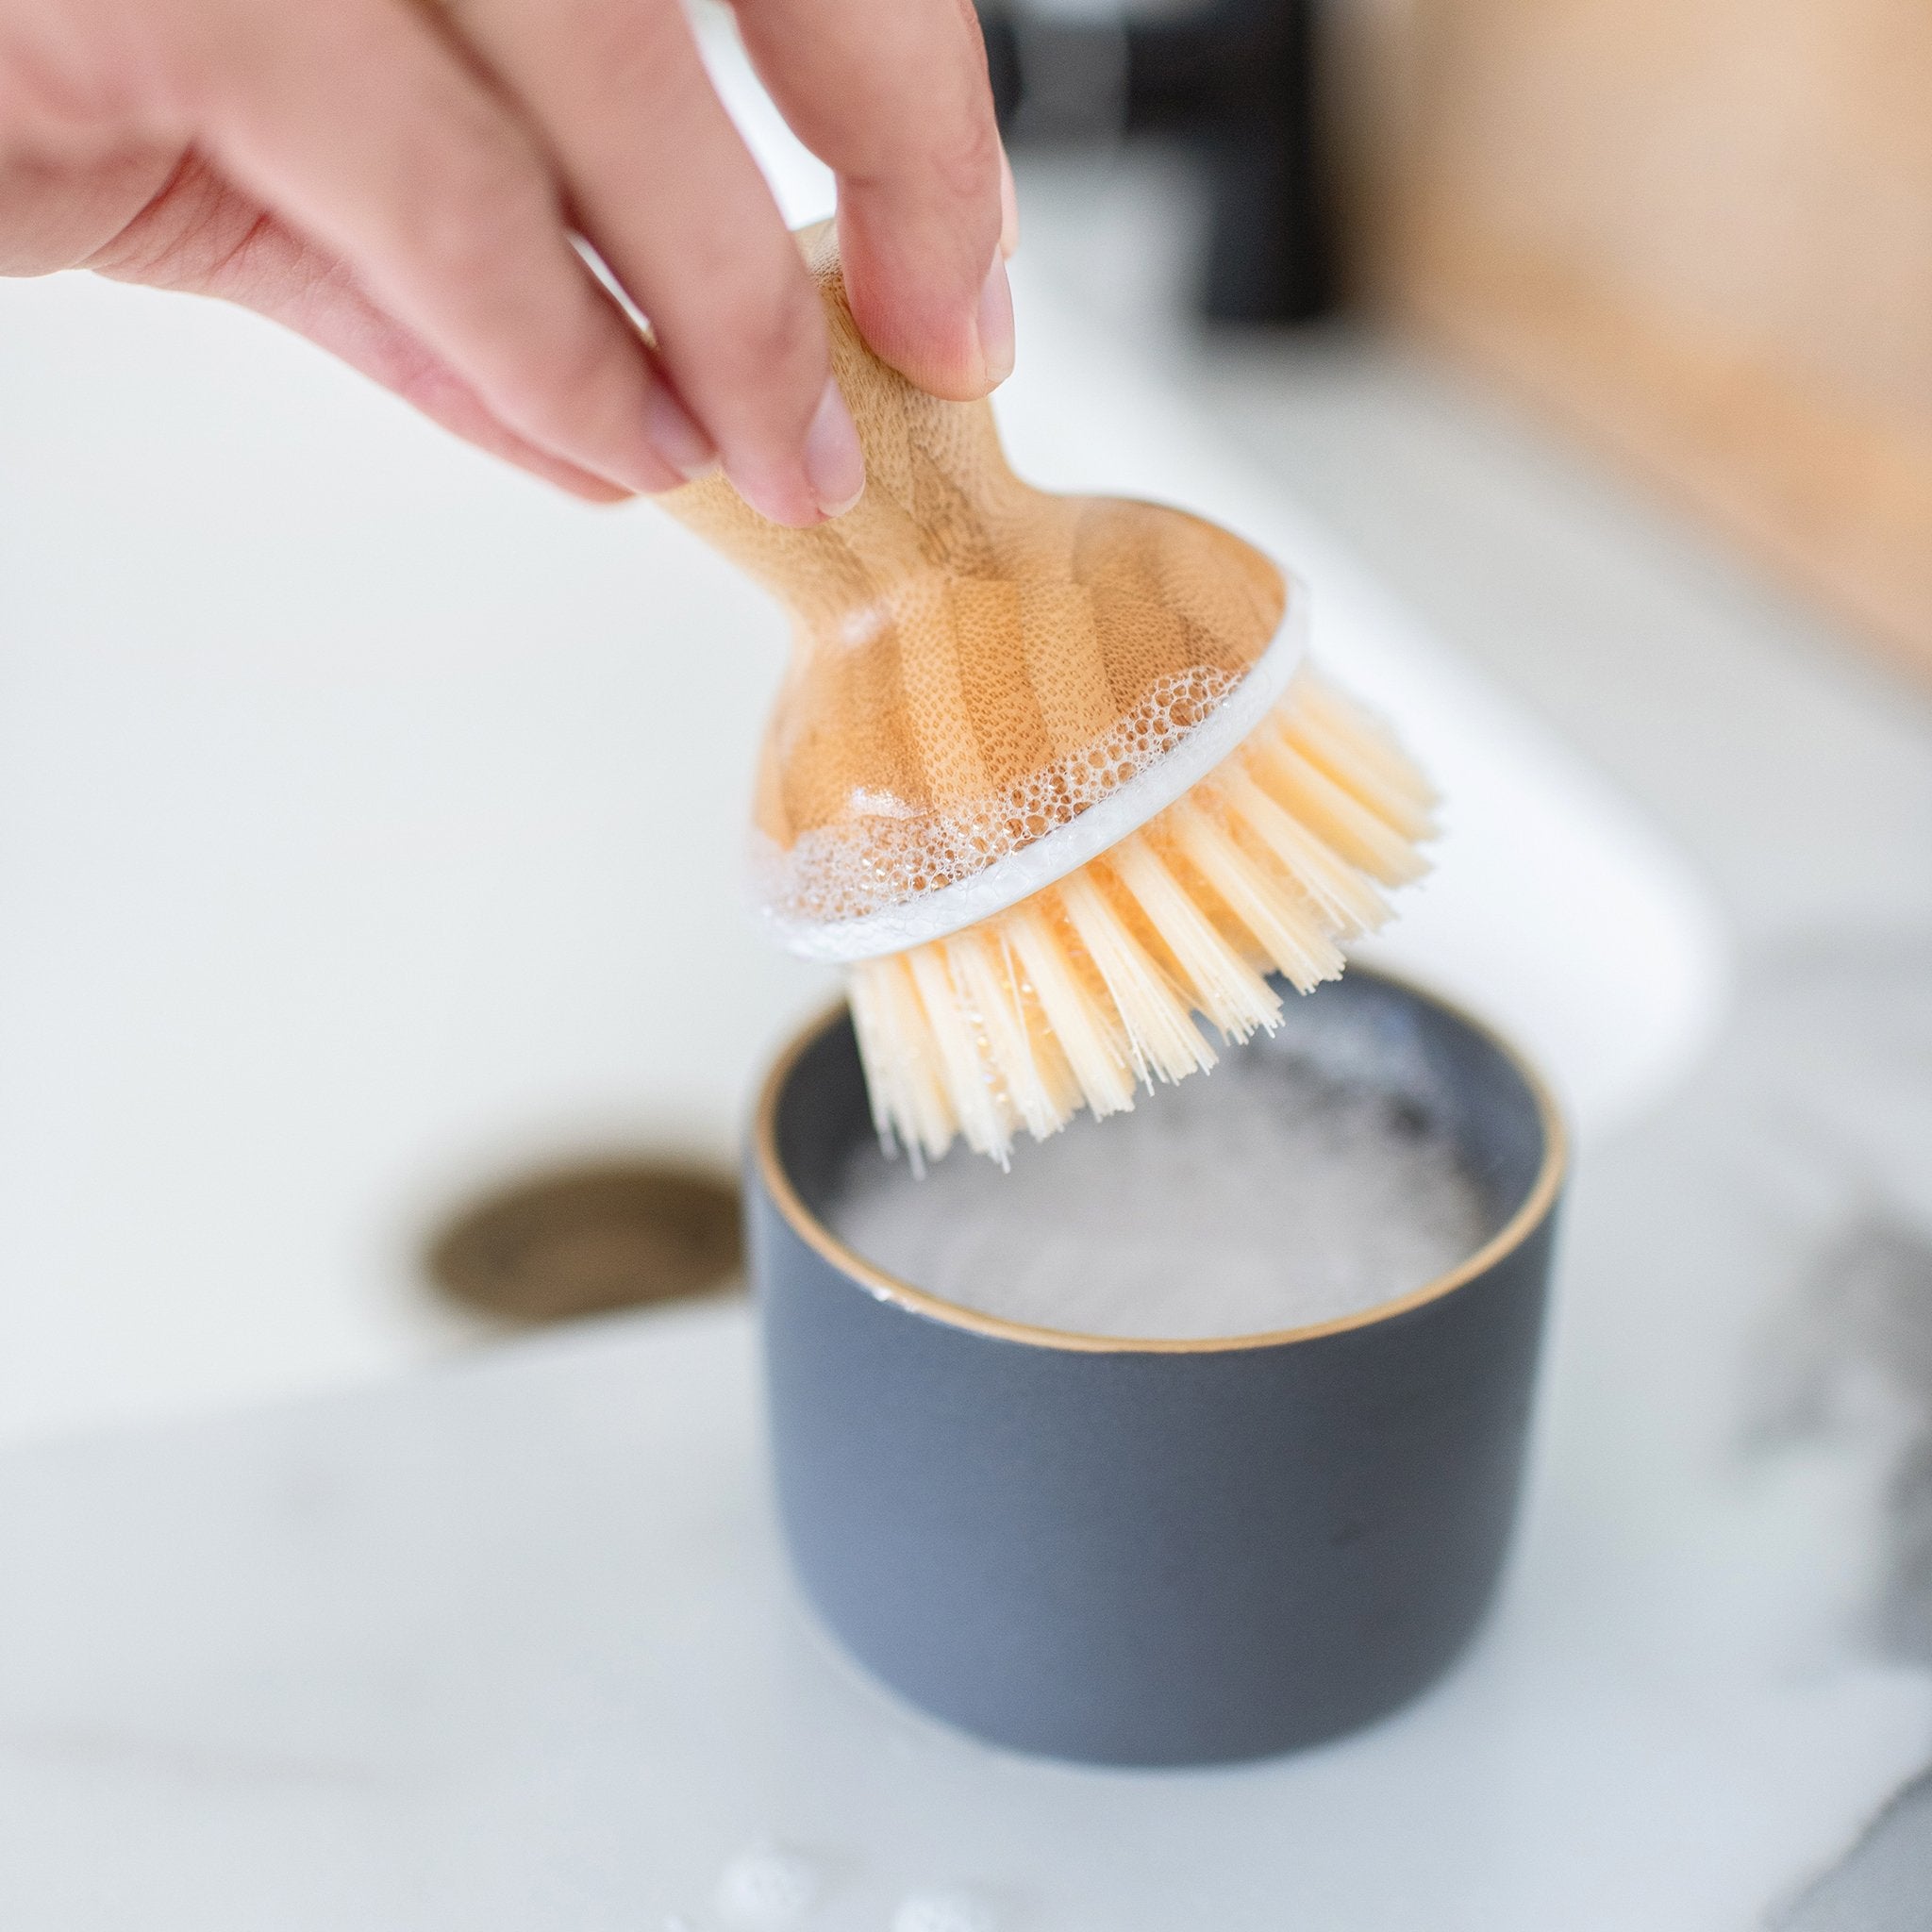 Kitchen Dishwashing Brush Dish Scrub Brush Dish Scrubber Bubble Up Brushes  with Soap Dispenser for Vegetable Utensils Cleaning